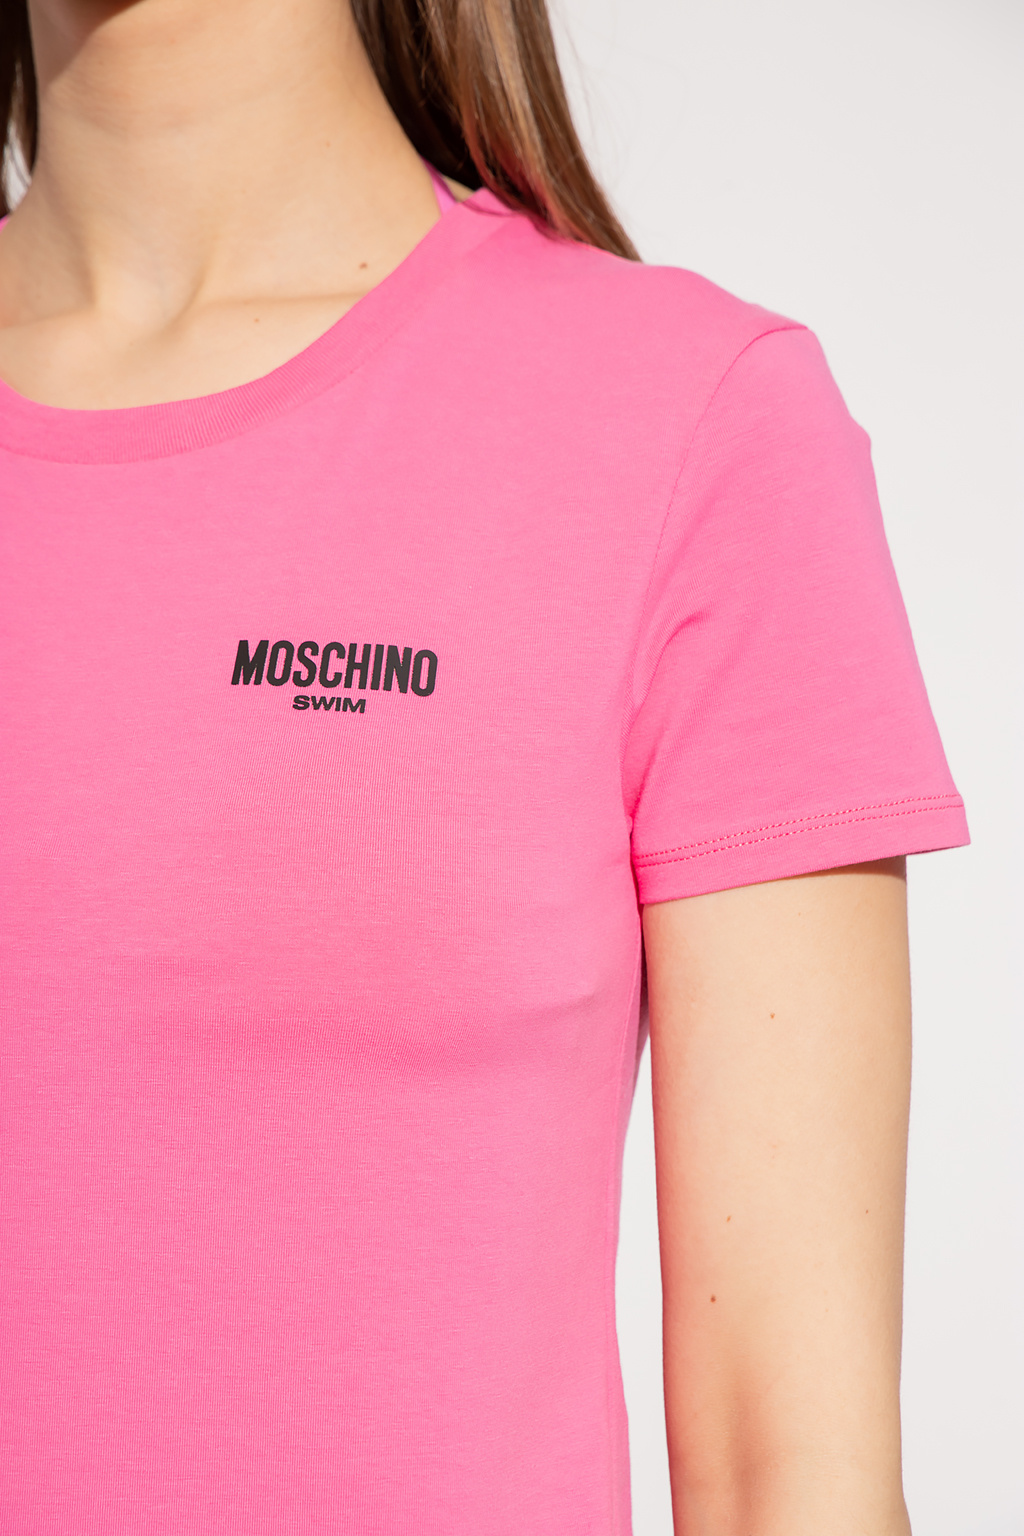 Moschino Santa Cruz T-shirt blu effetto tie-dye con logo In esclusiva per ASOS